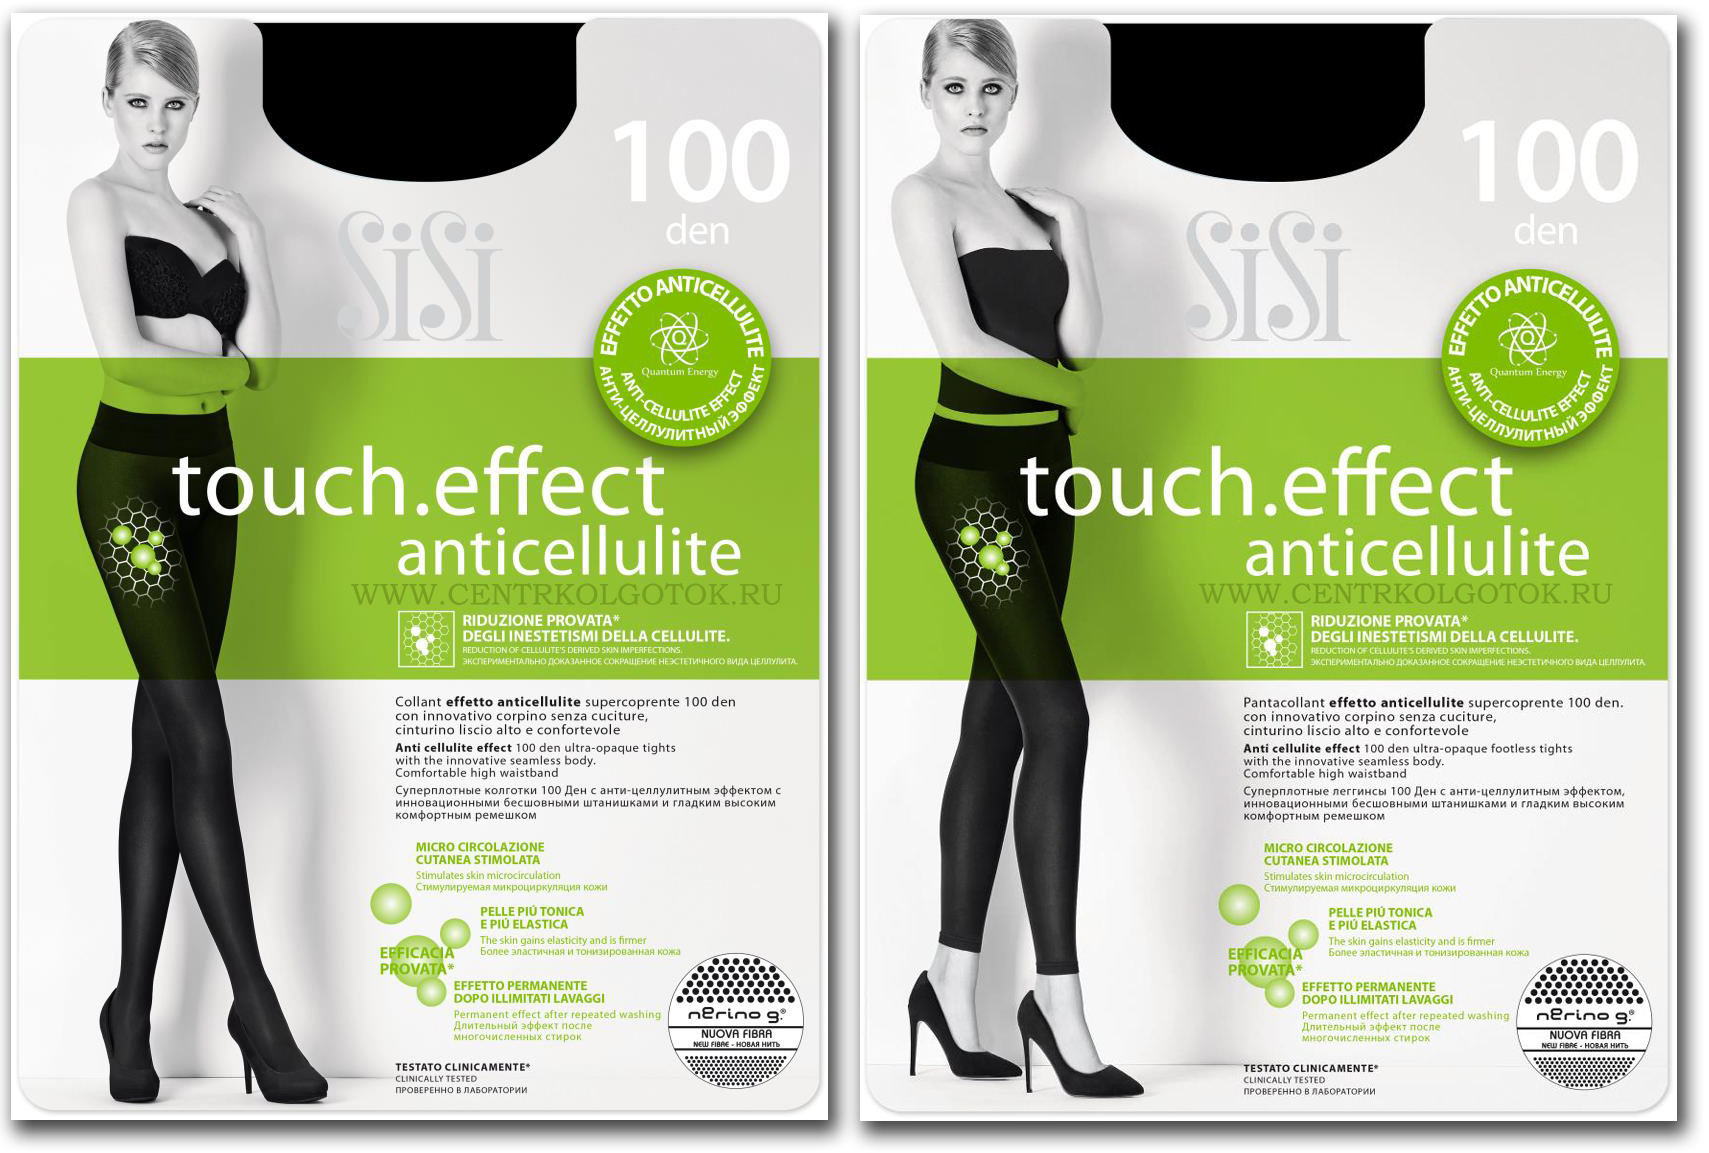 Колготки SISI Touch Effect Anticellulite 100